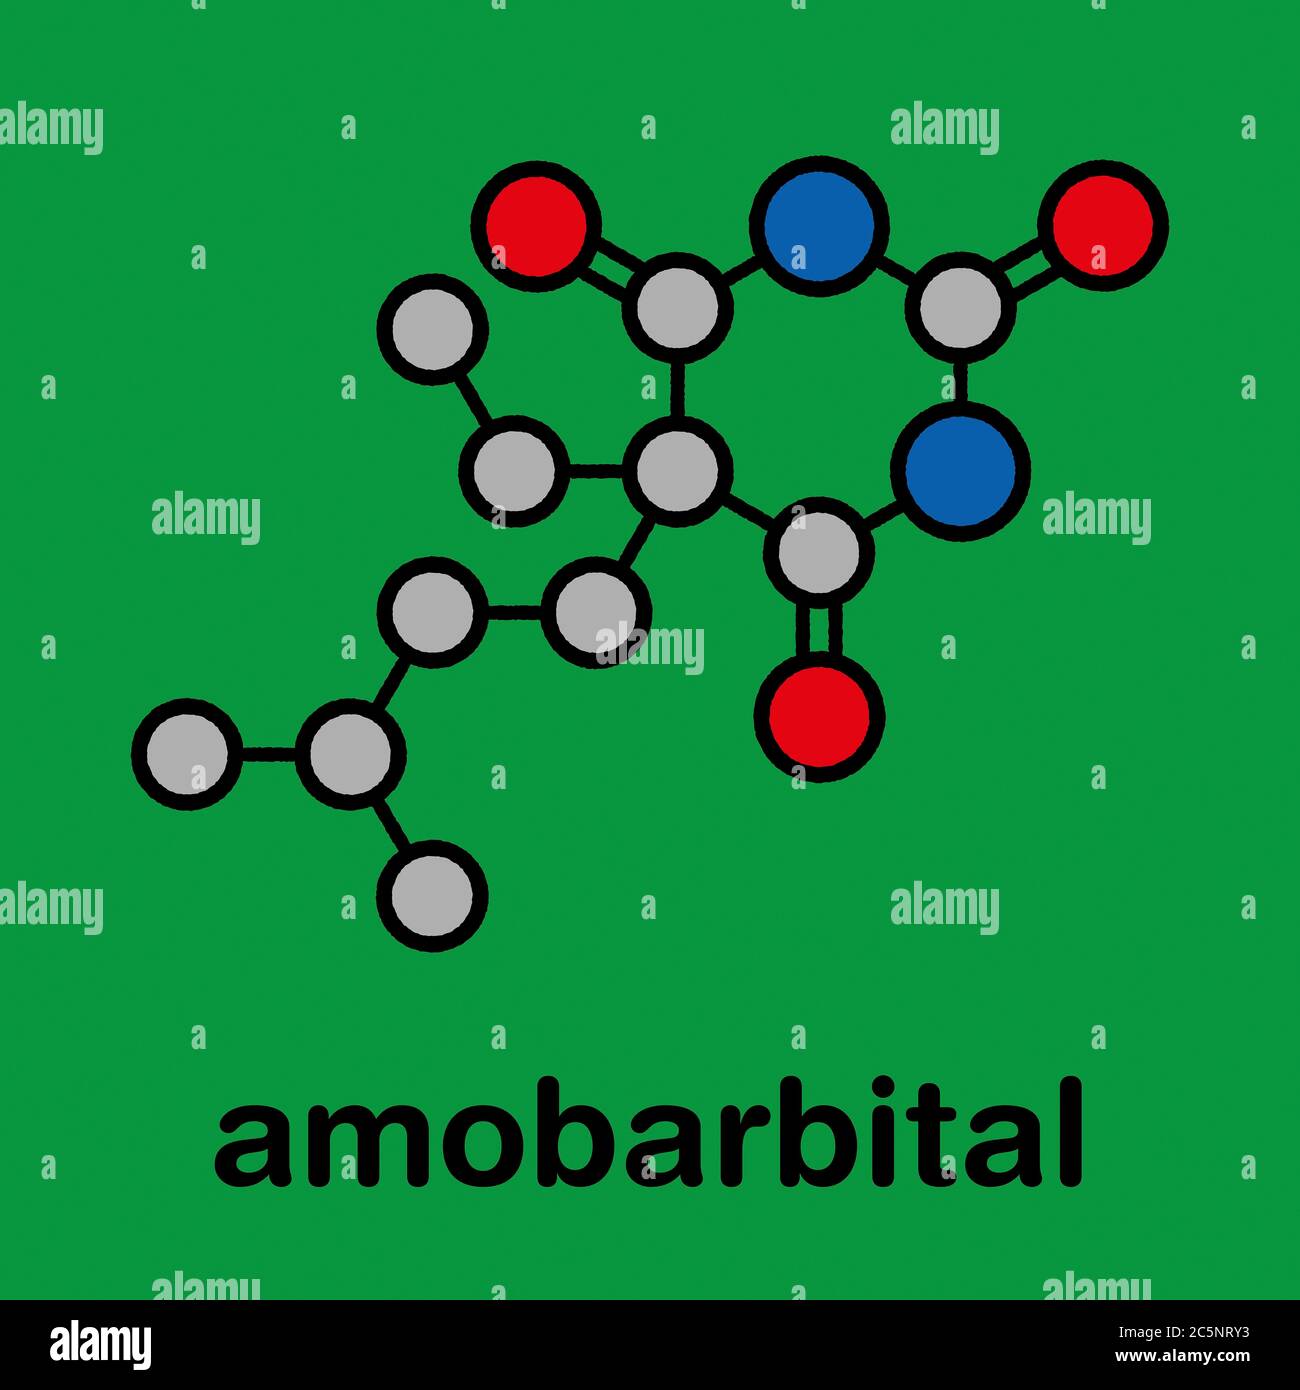 Amobarbital (amylobarbitone) barbiturate sedative, chemical structure. Stock Photo